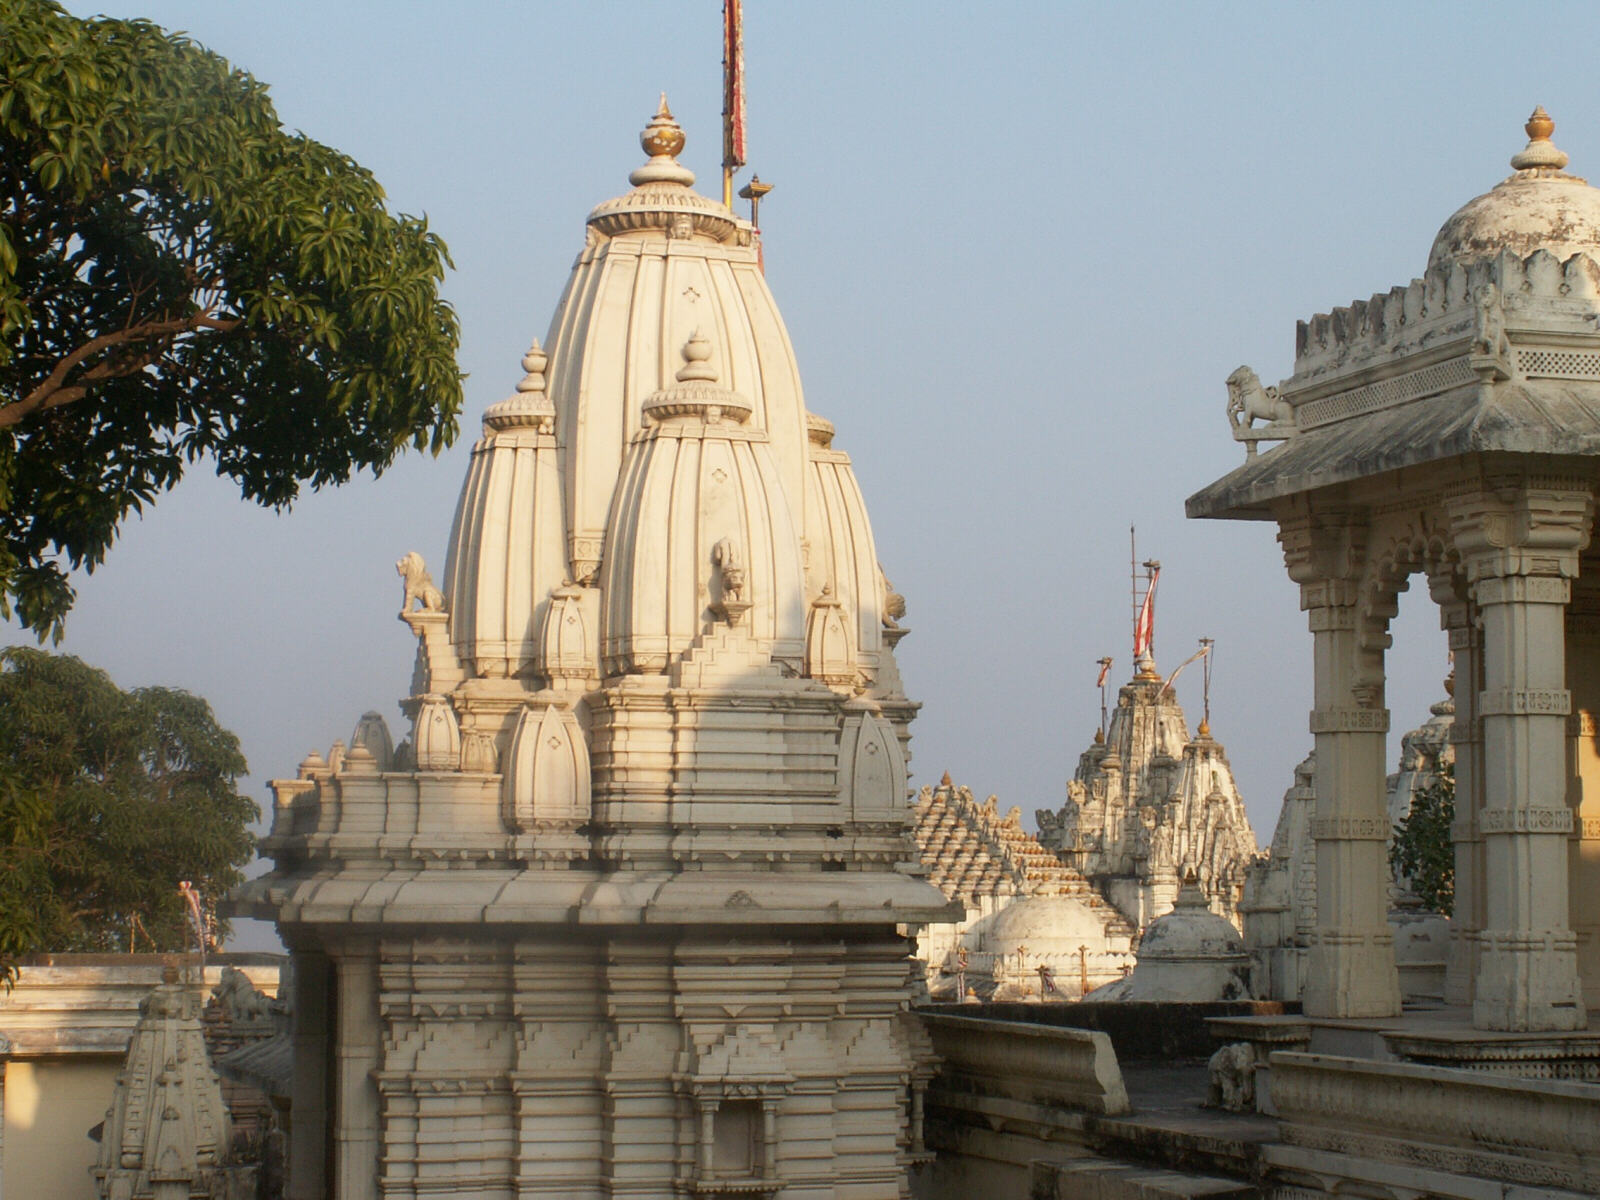 The Shatrunjaya Jain temples in Gujerat, India